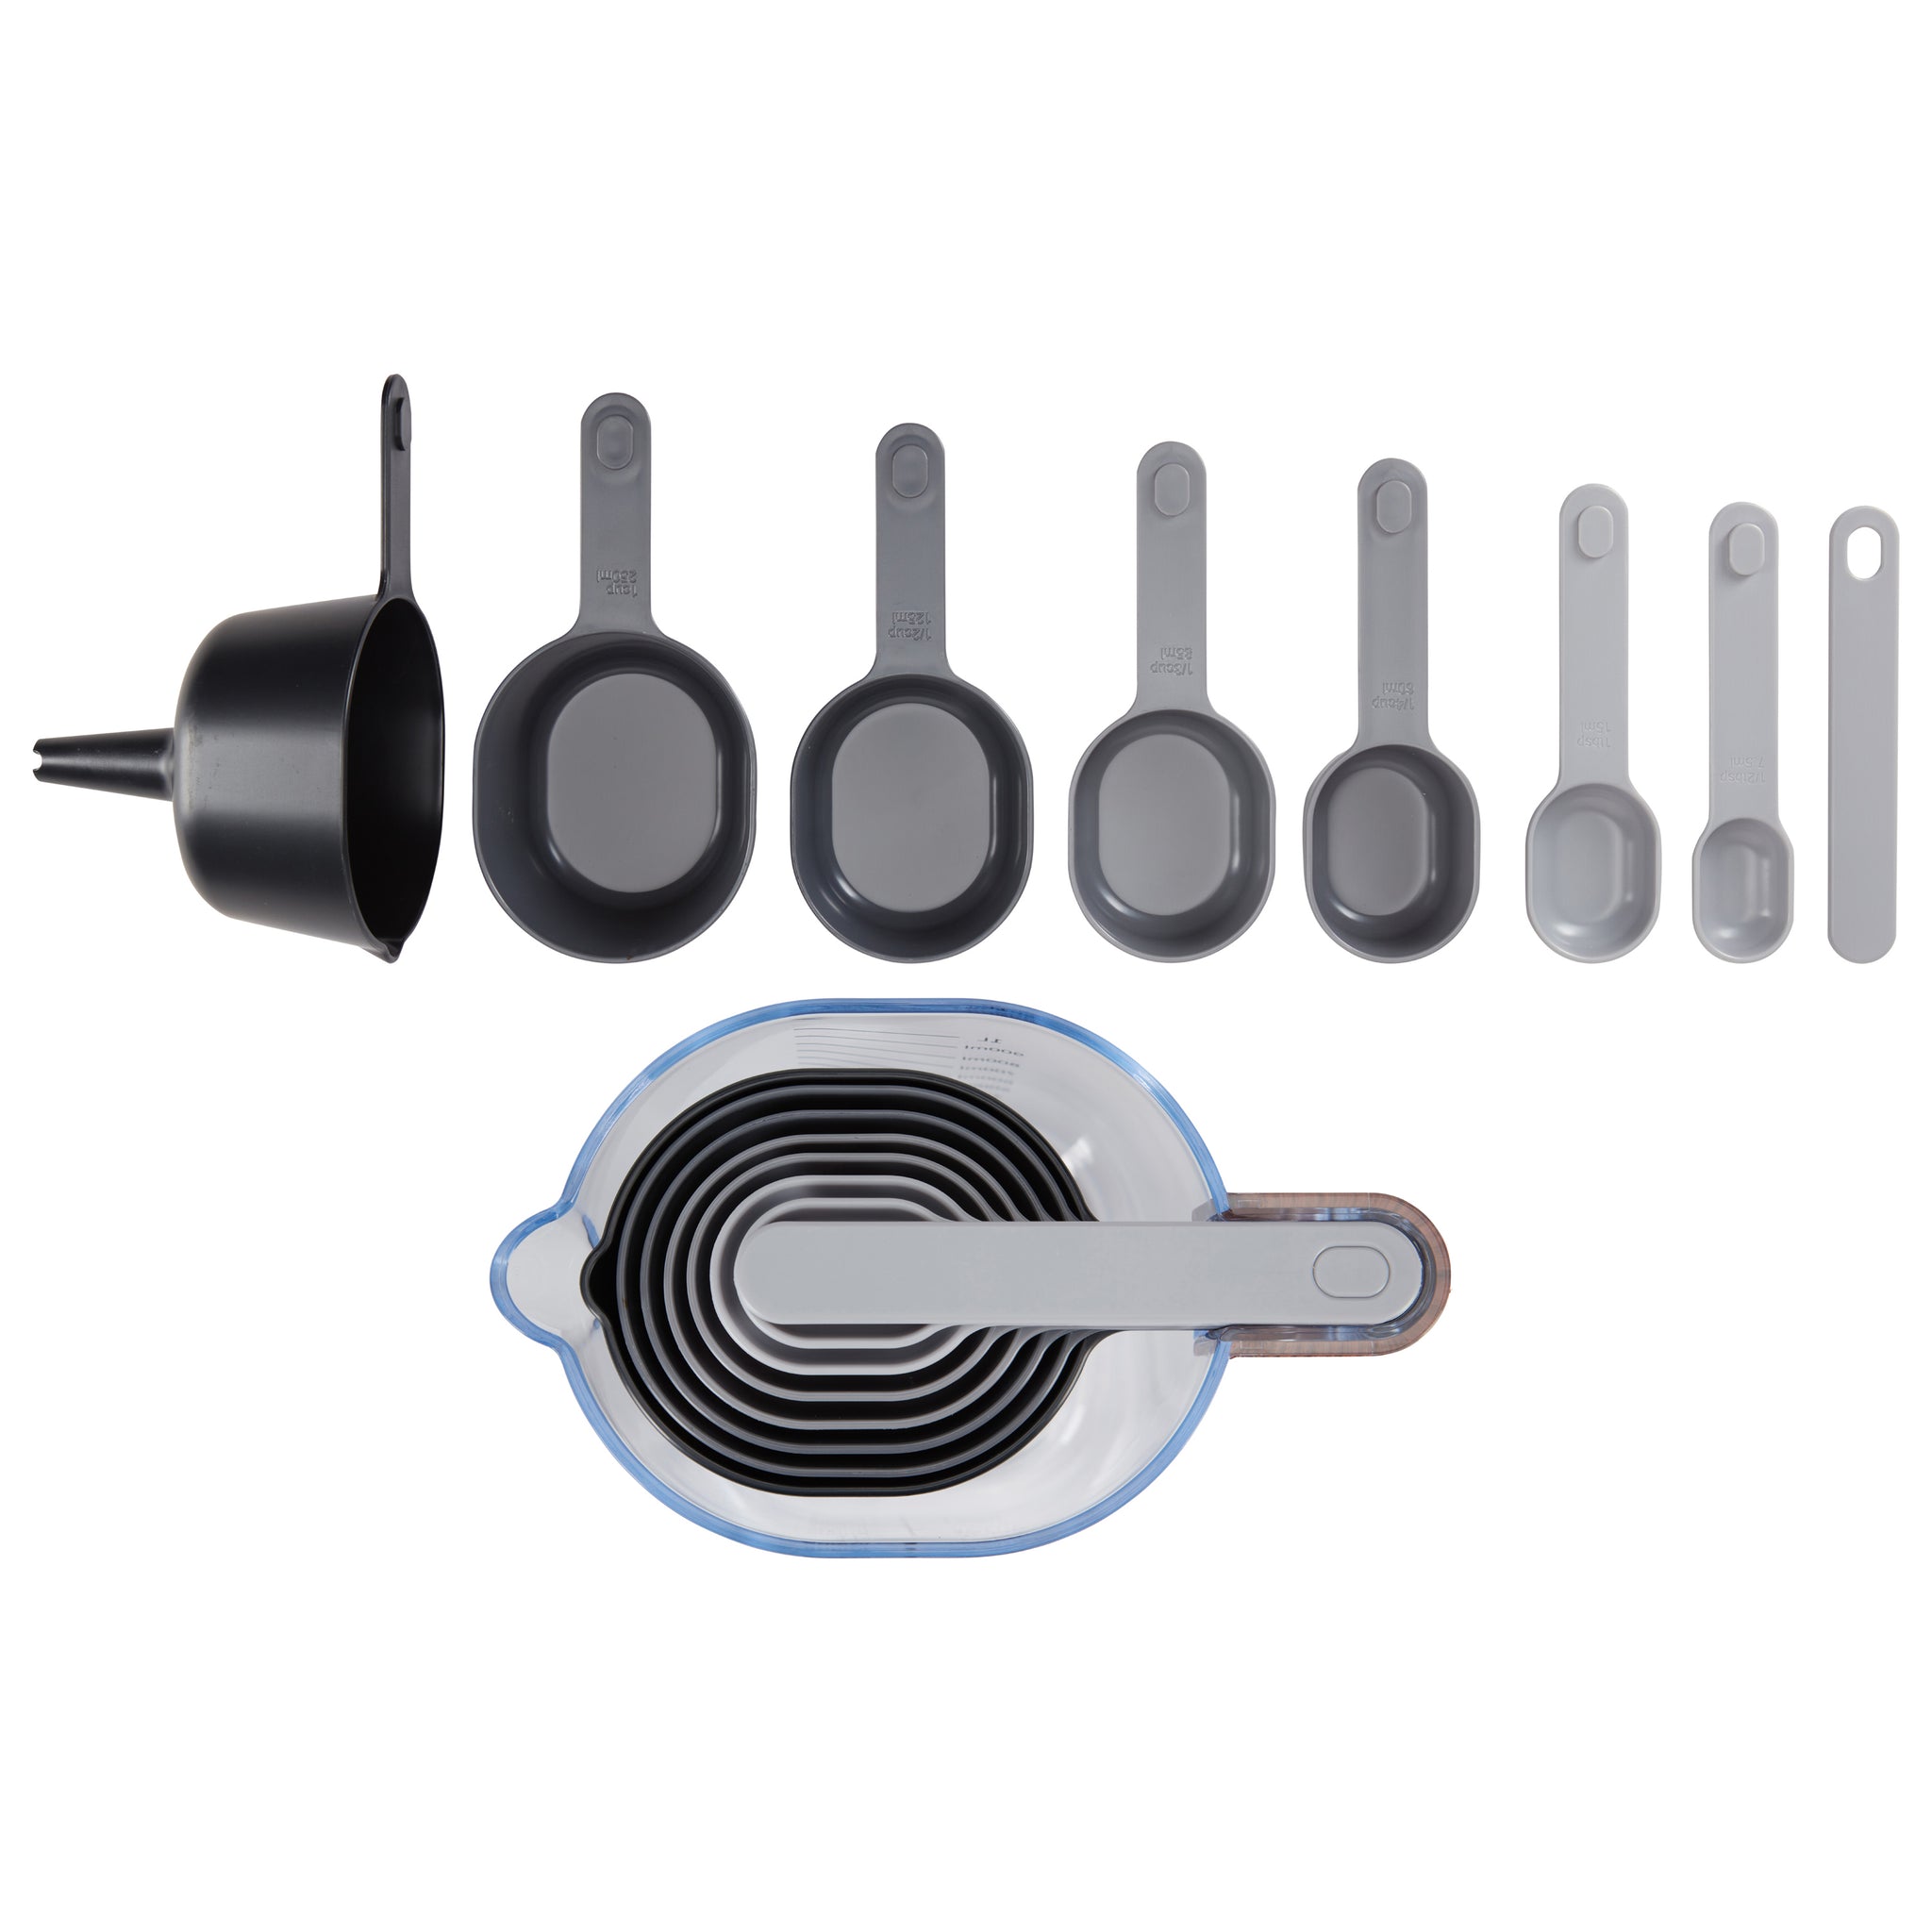 Phantom Chef 9 Piece Nested Measuring Cup & Spoon Set - Black